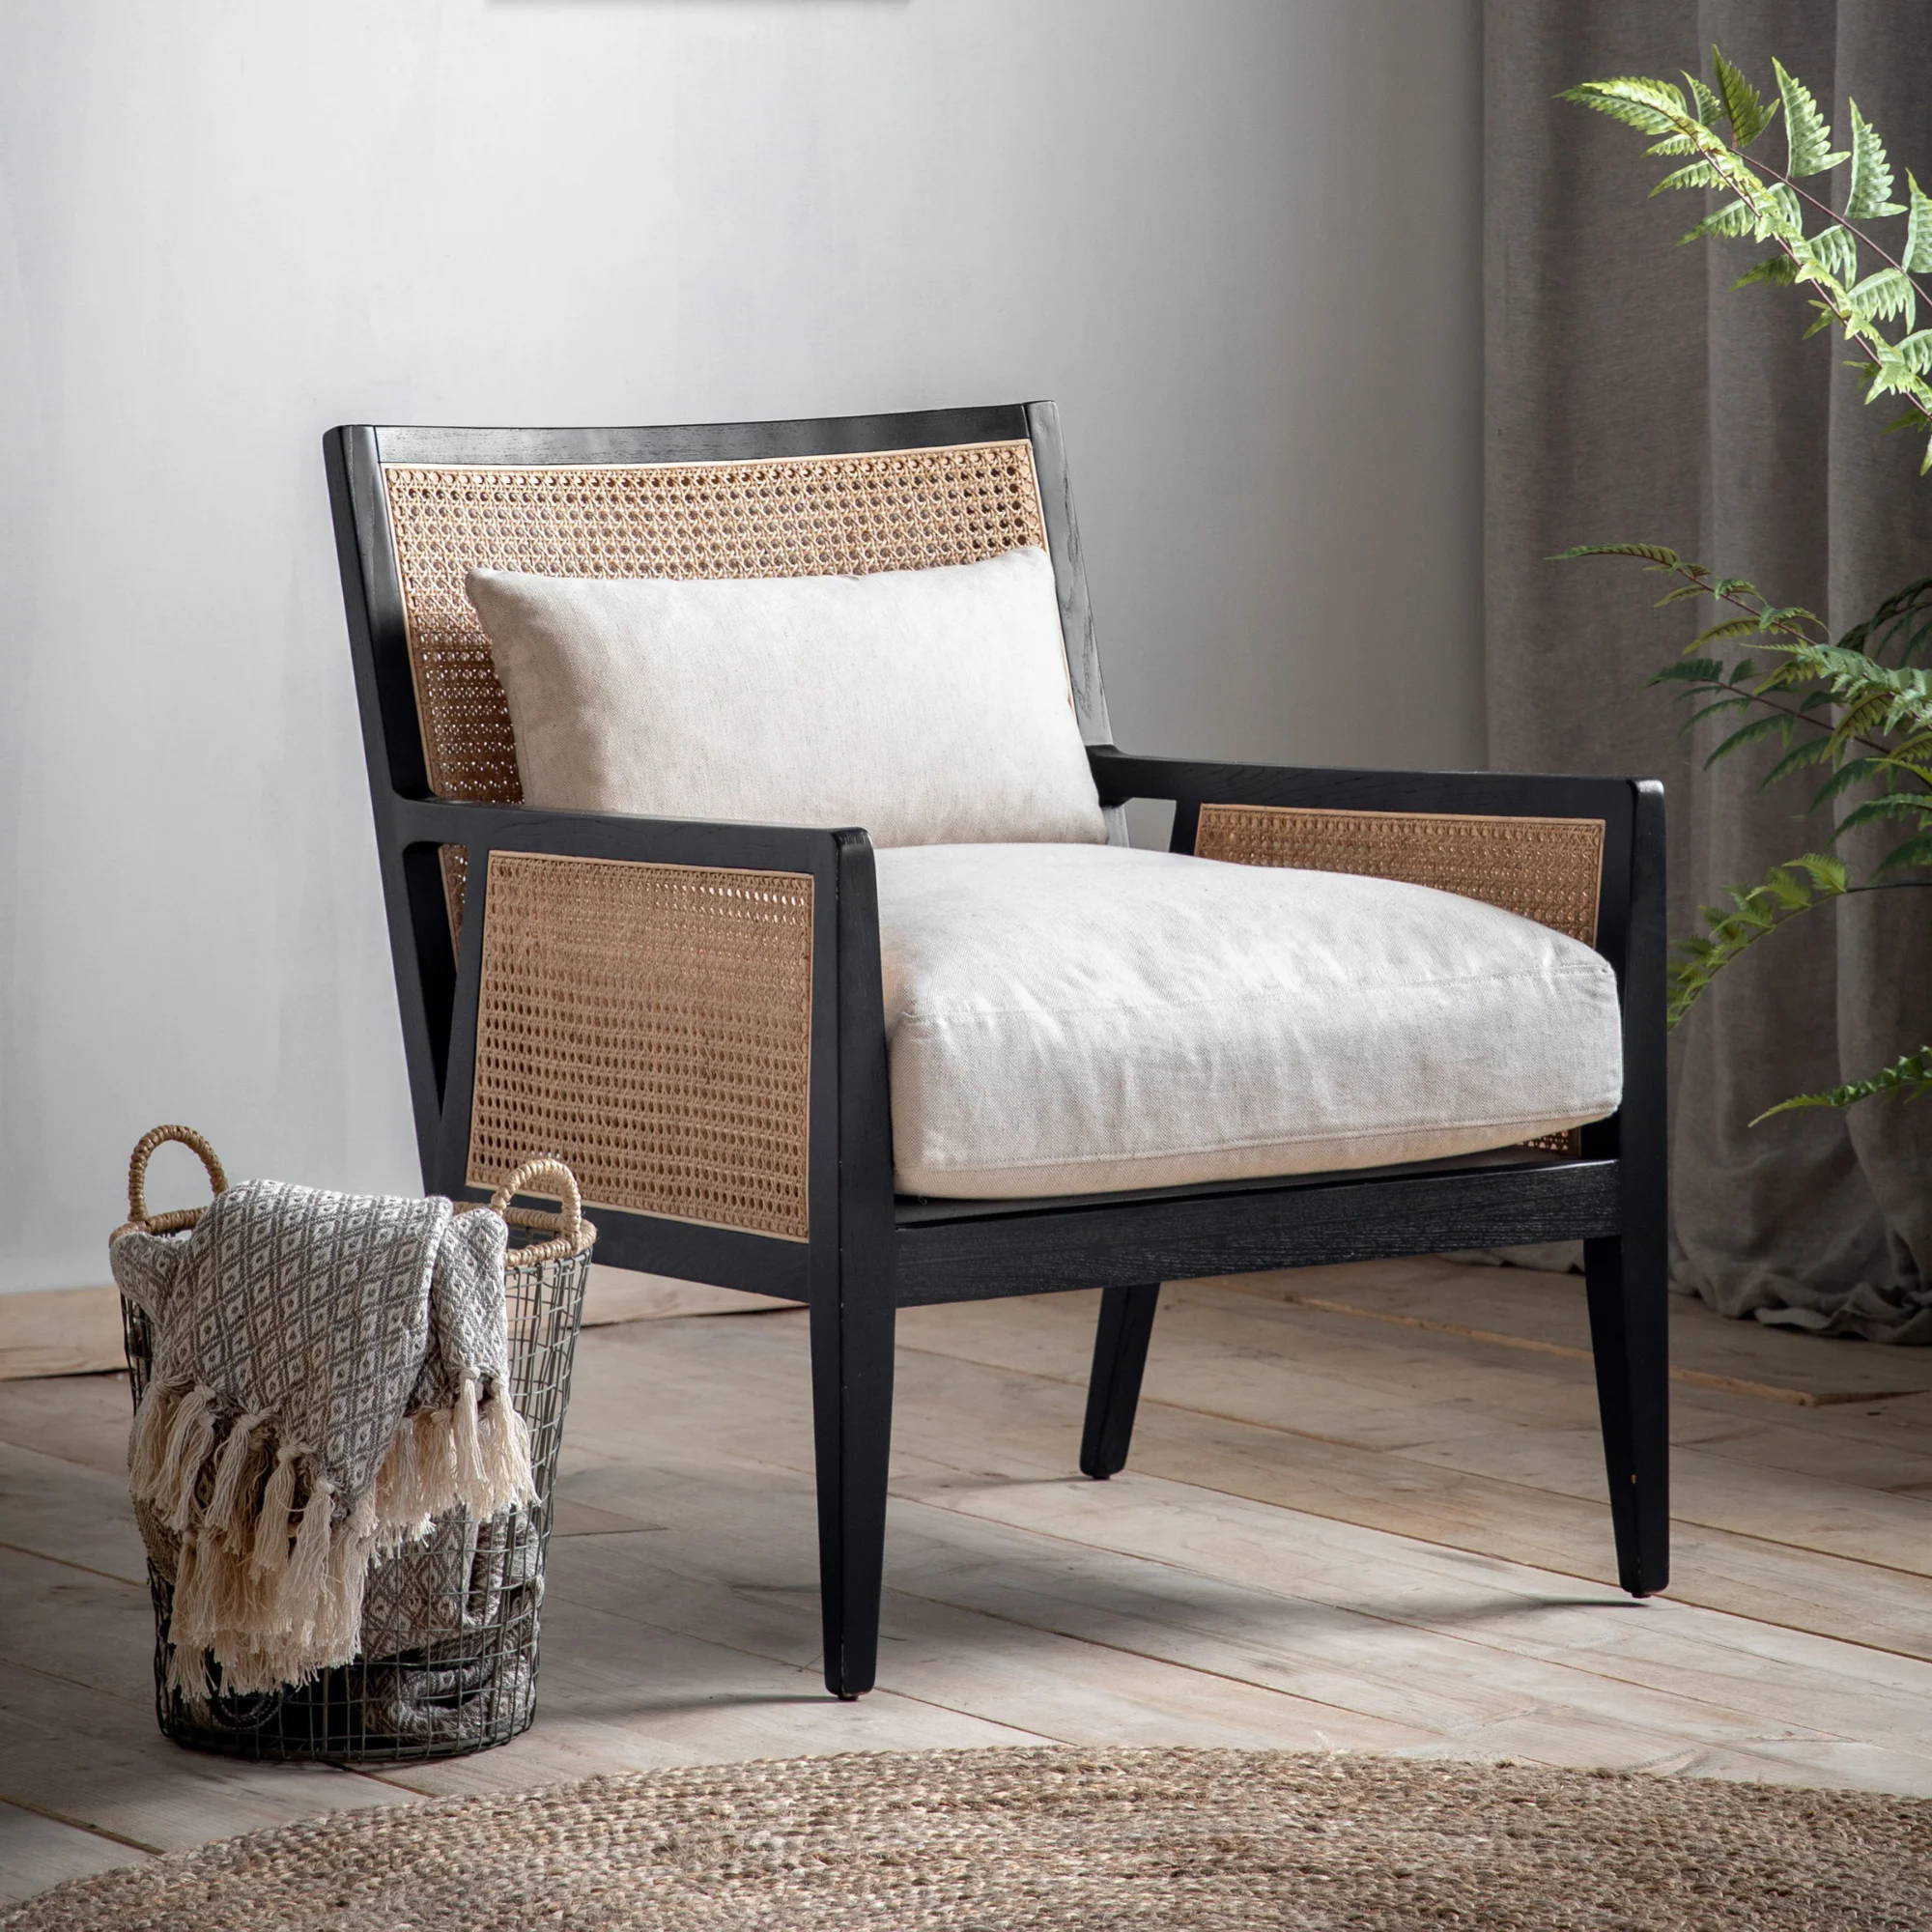 OSAKA armchair with rattan panels | MalletandPlane.com